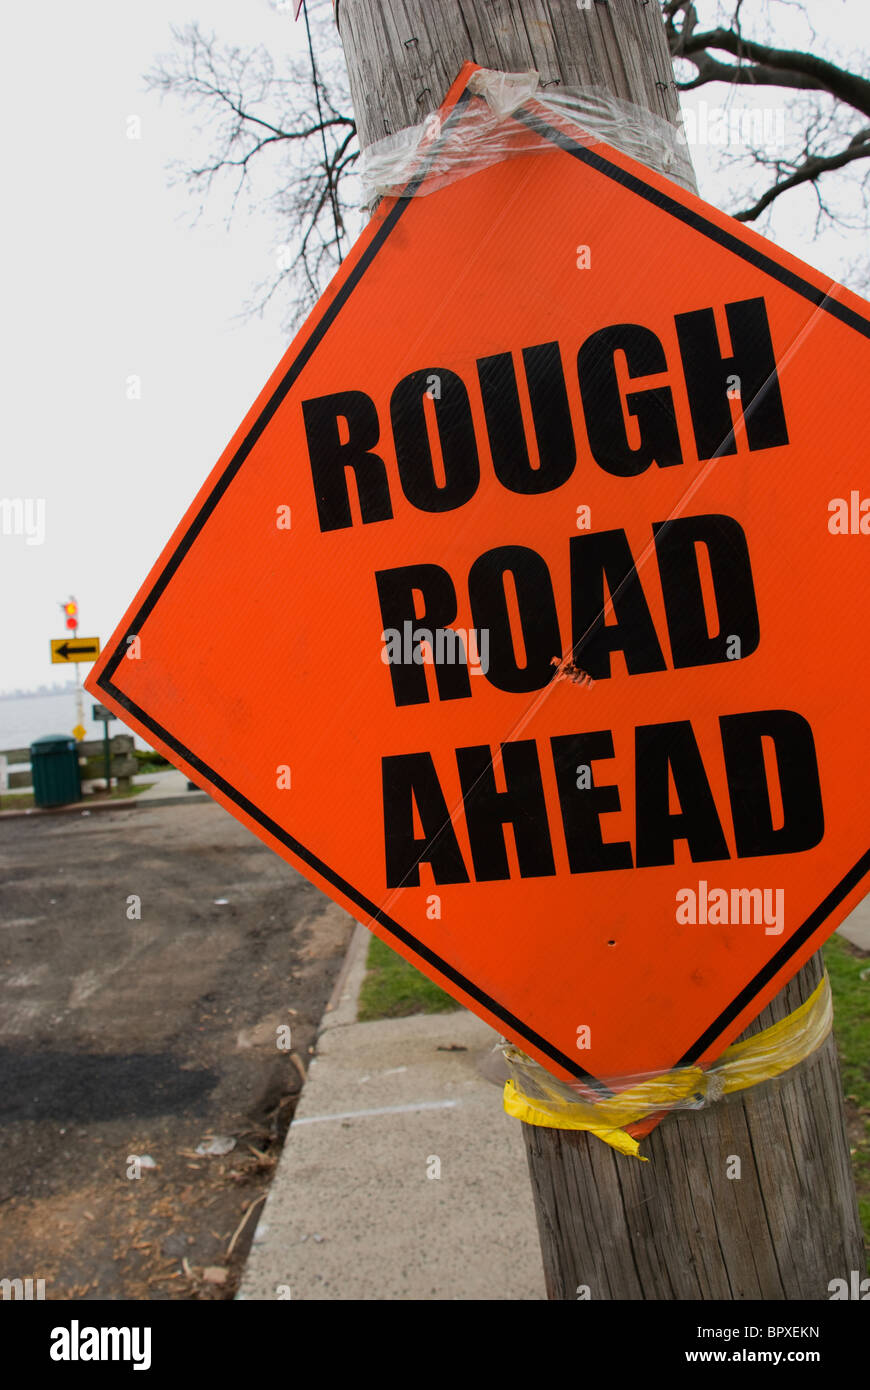 close up of orange diamond shaped sign reading 'Rough Road Ahead' Stock Photo